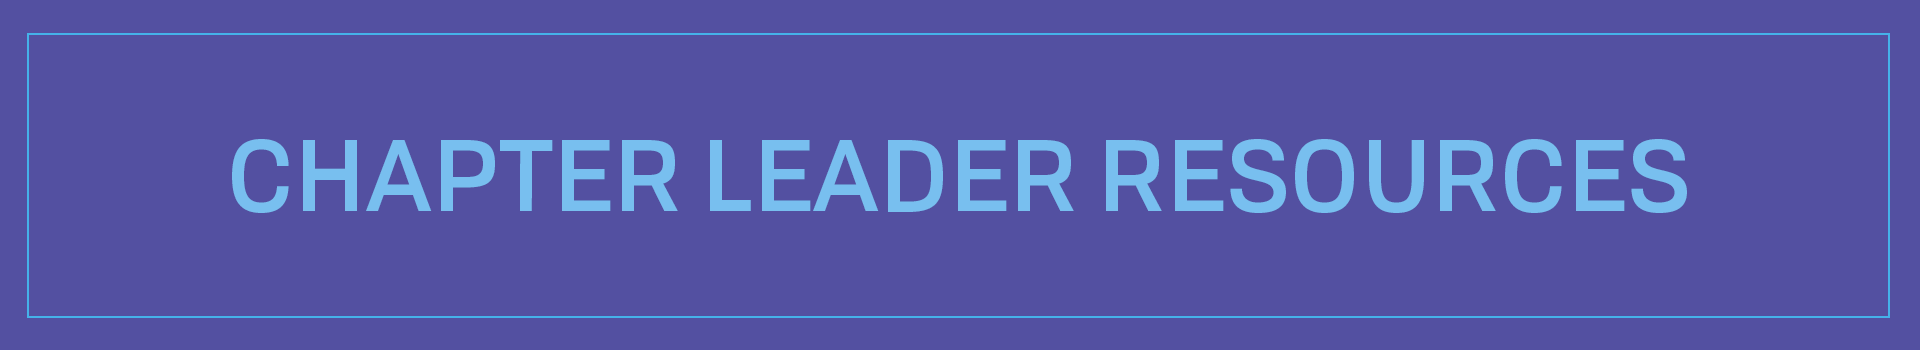 Chapter-Leader-Resources-Header